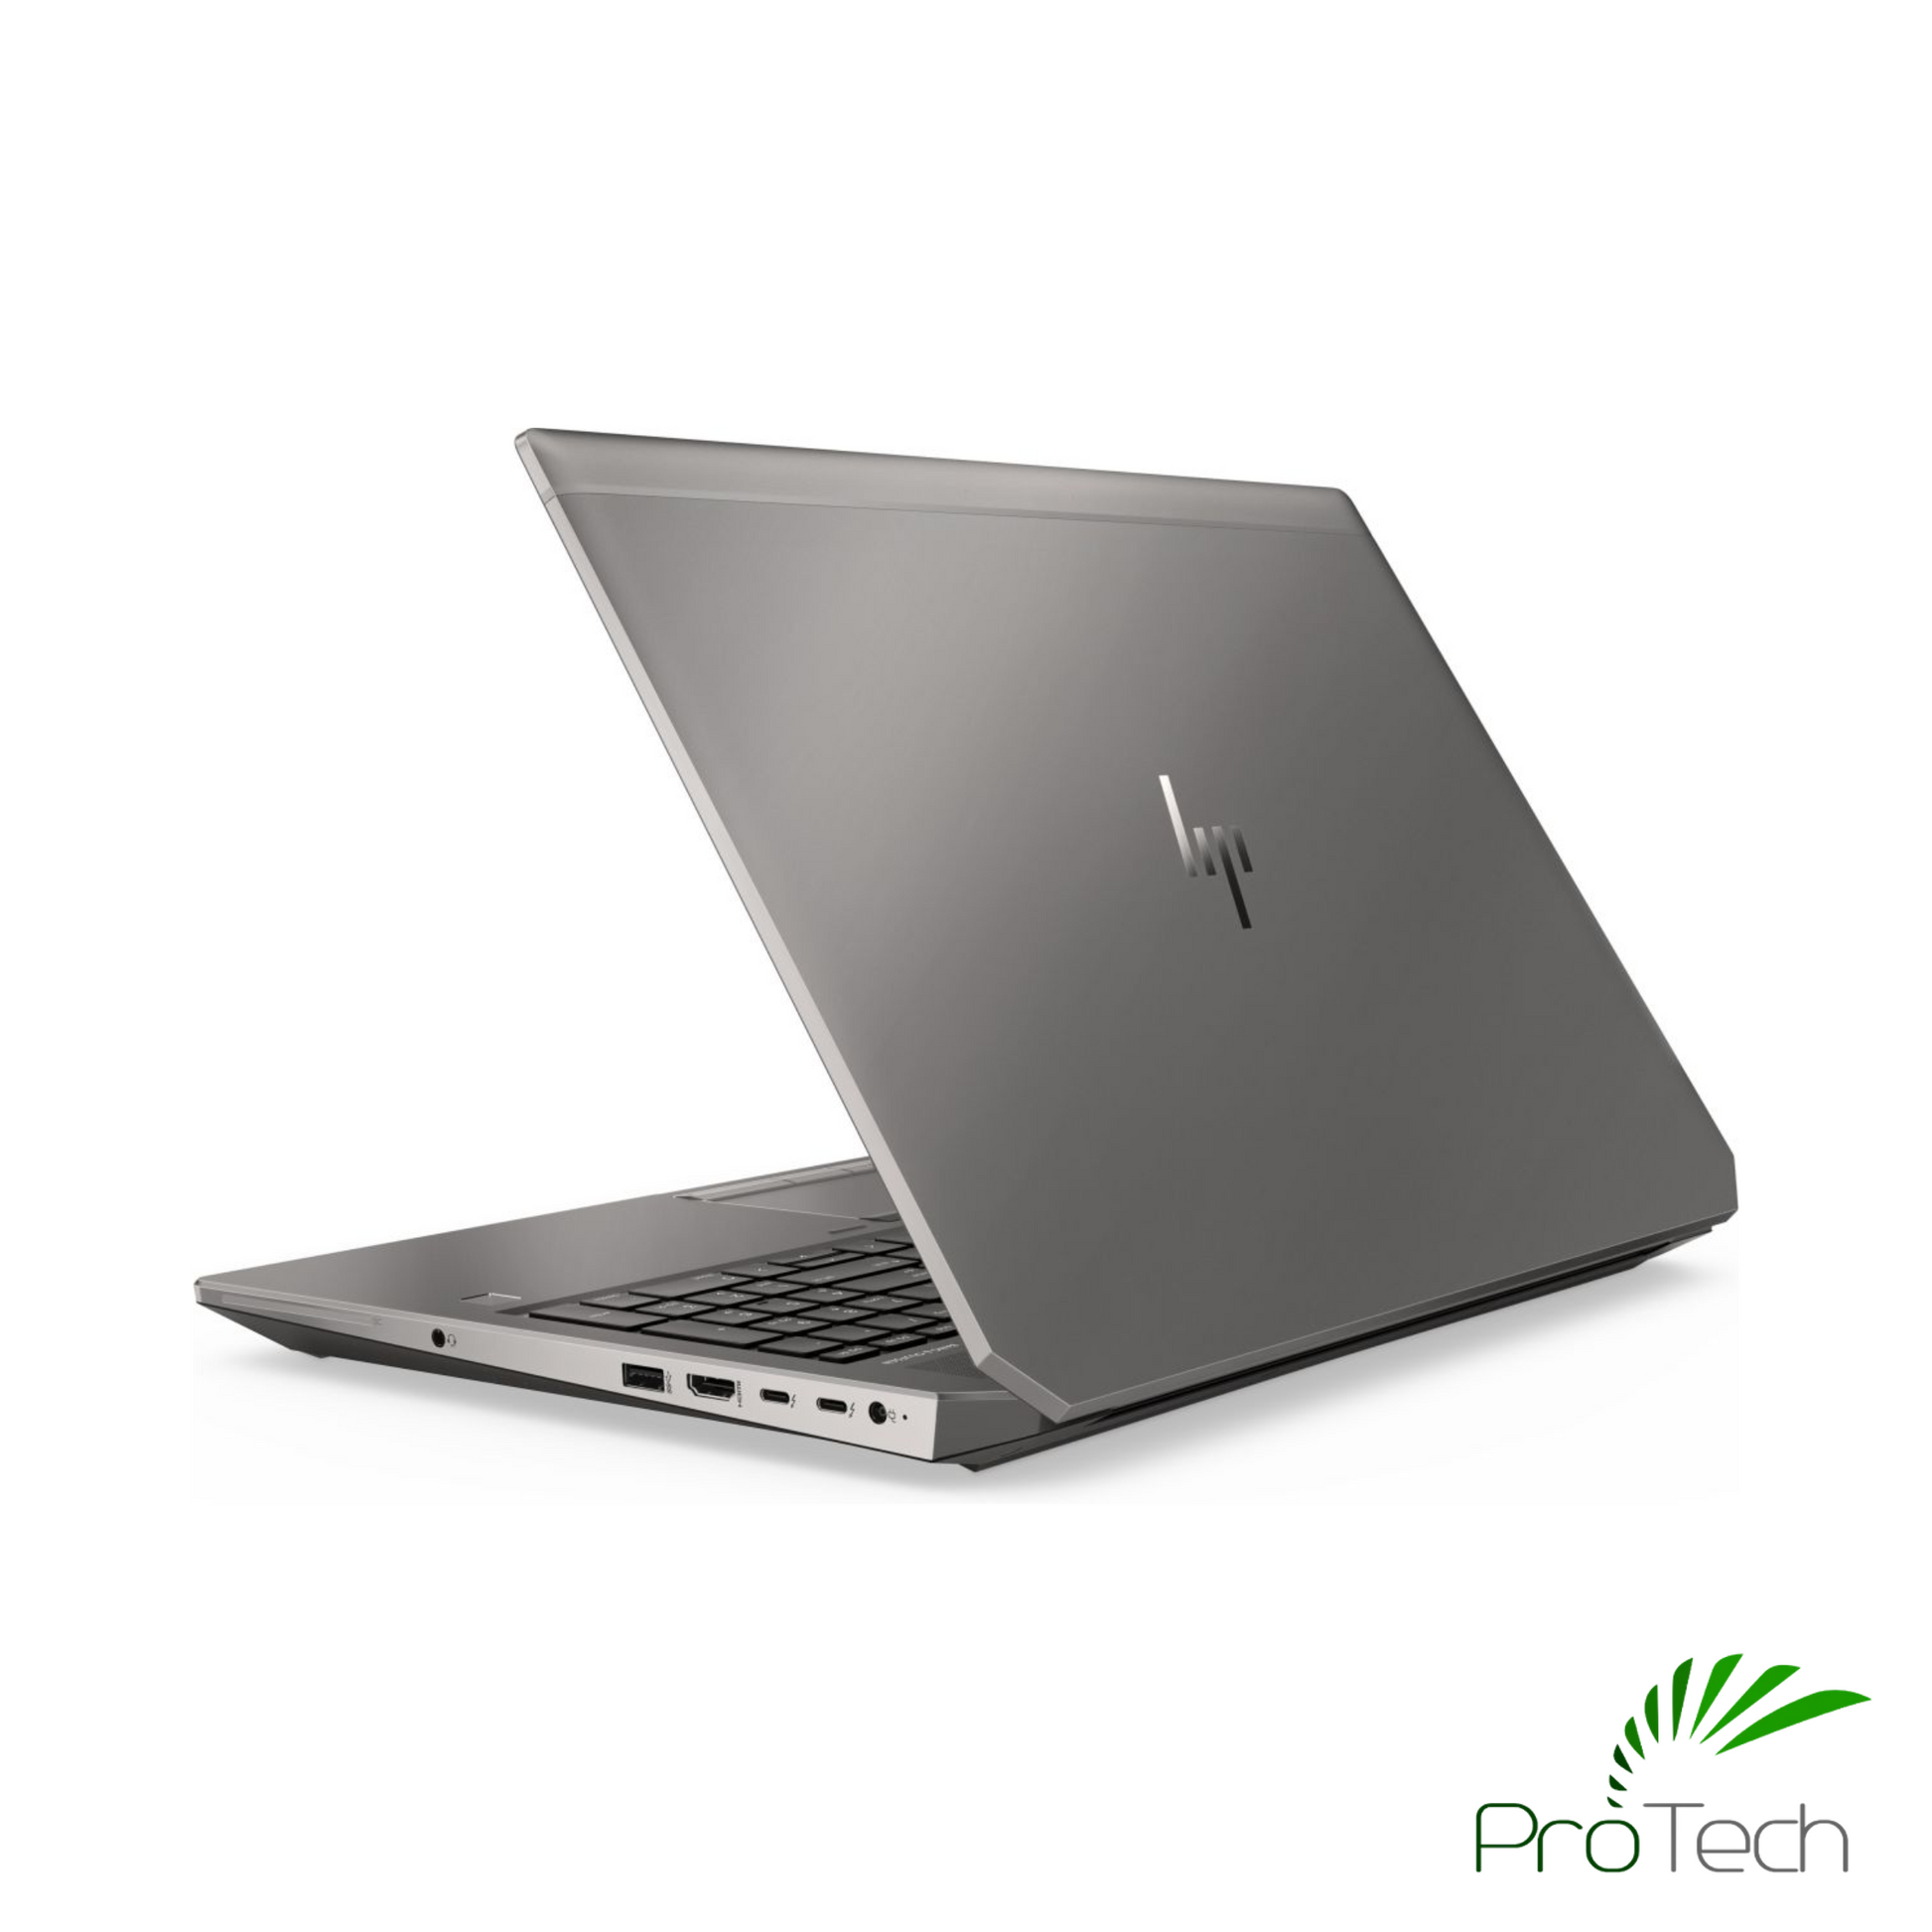 HP ZBook 15 G5 Workstation 15.6" | Core i7 | 16GB RAM | 256GB SSD + 1TB HDD | NVidia Quadro ProTech I.T. Solutions